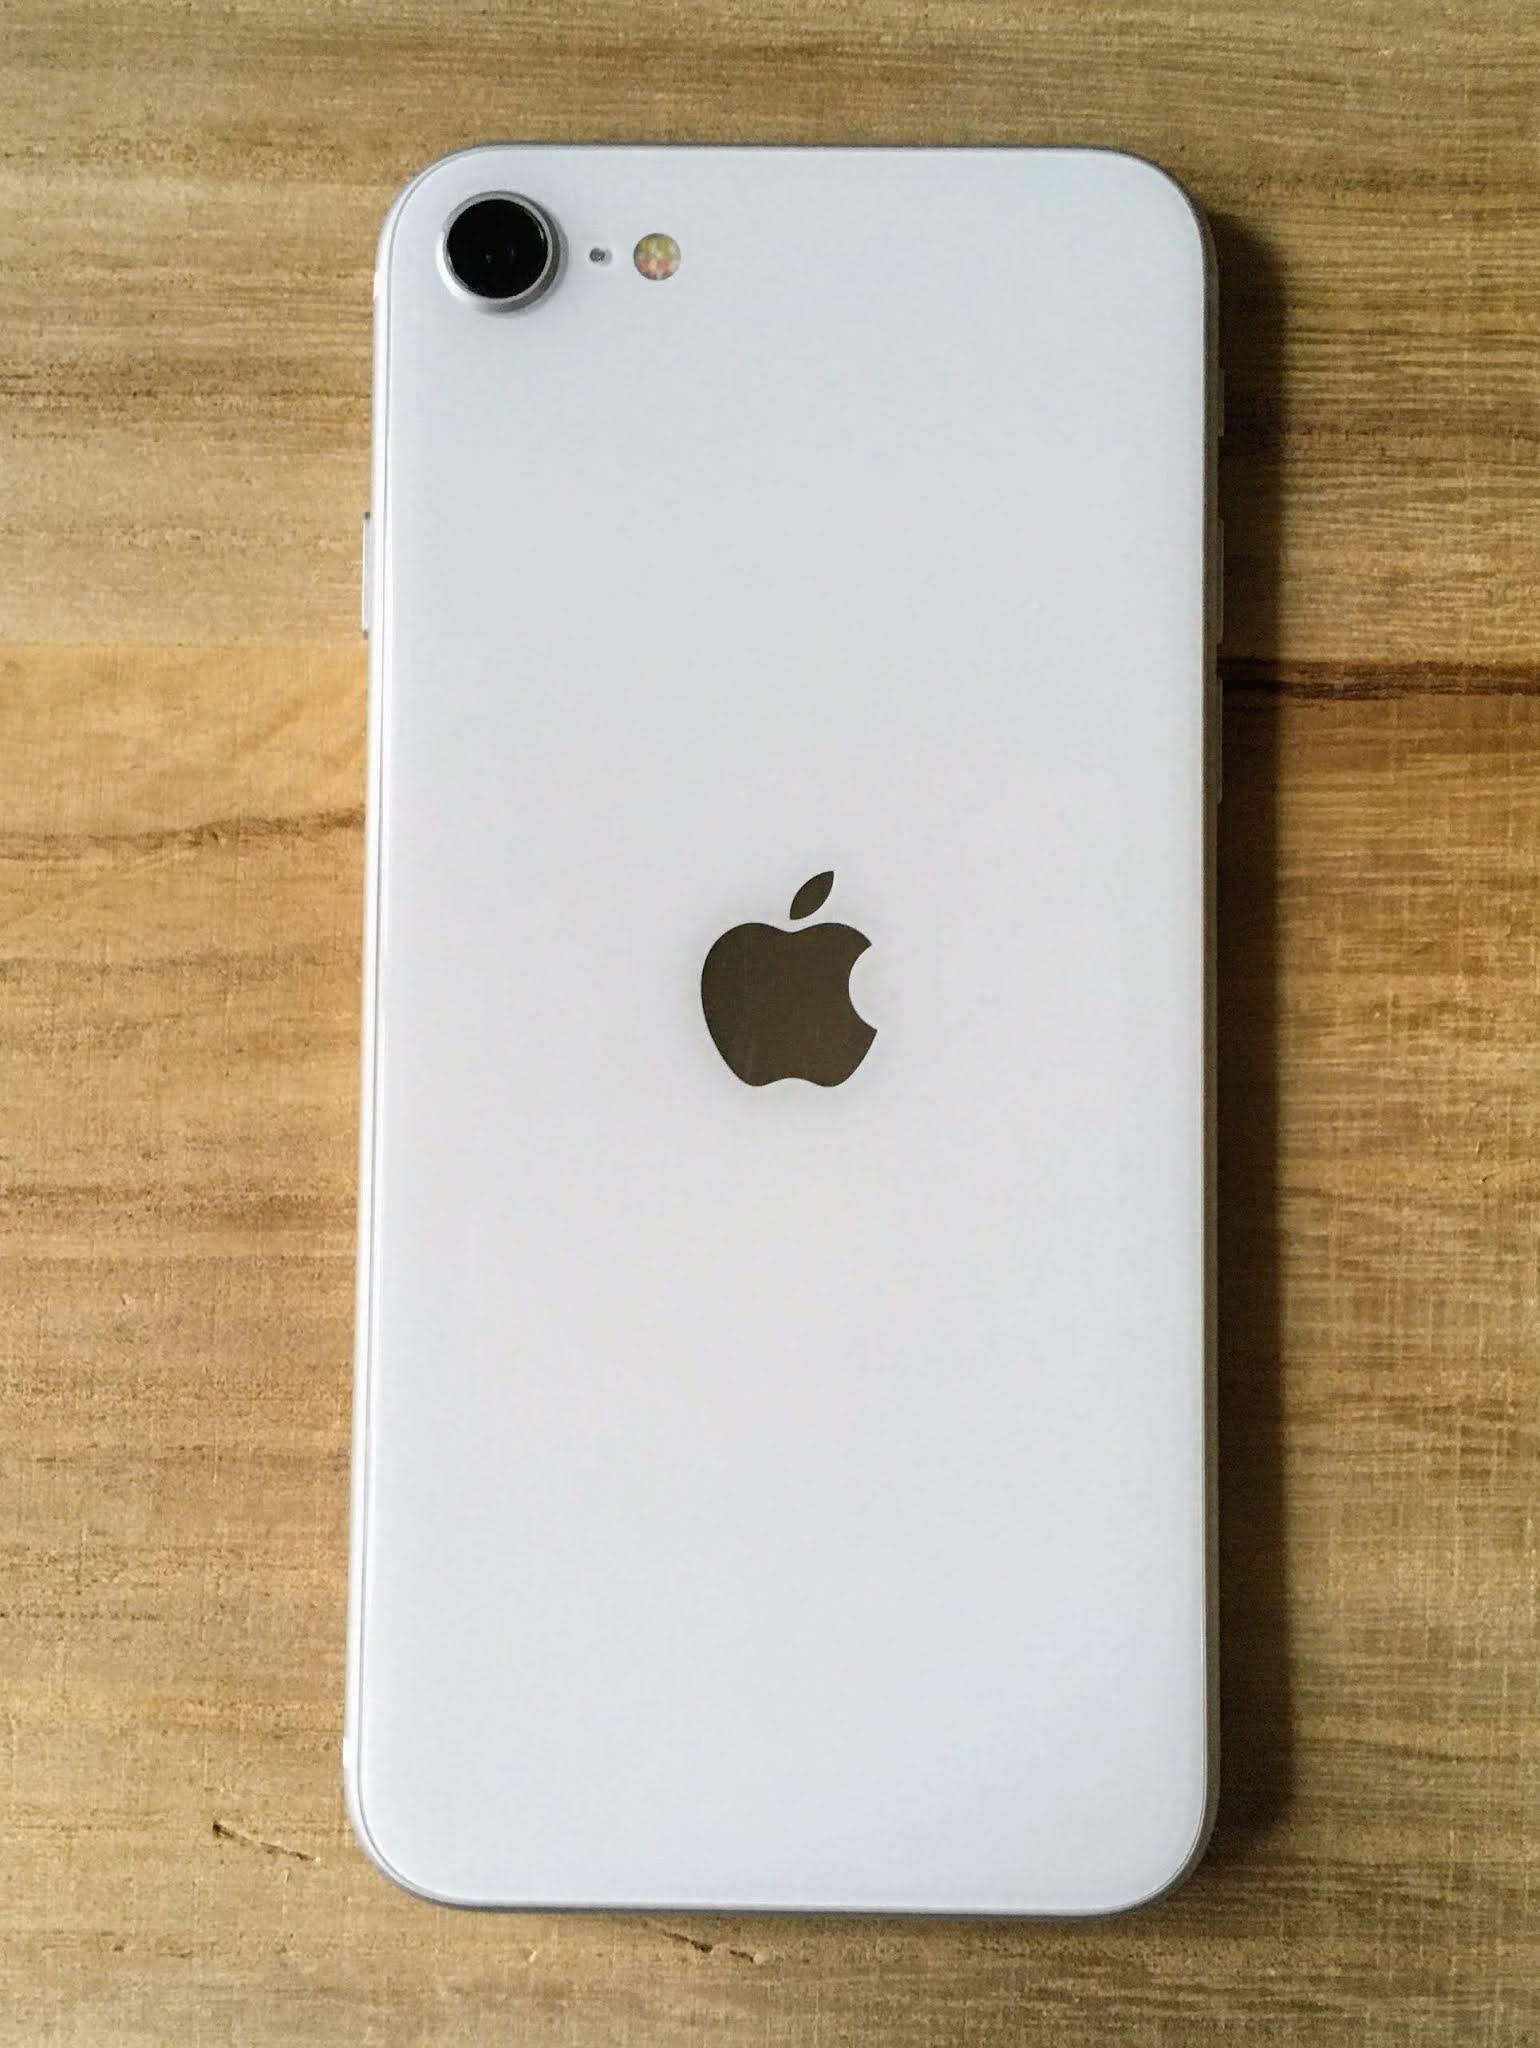 iPhone SE 第2世代 (SE2) ホワイト 128GB SIMフリー - 携帯電話本体